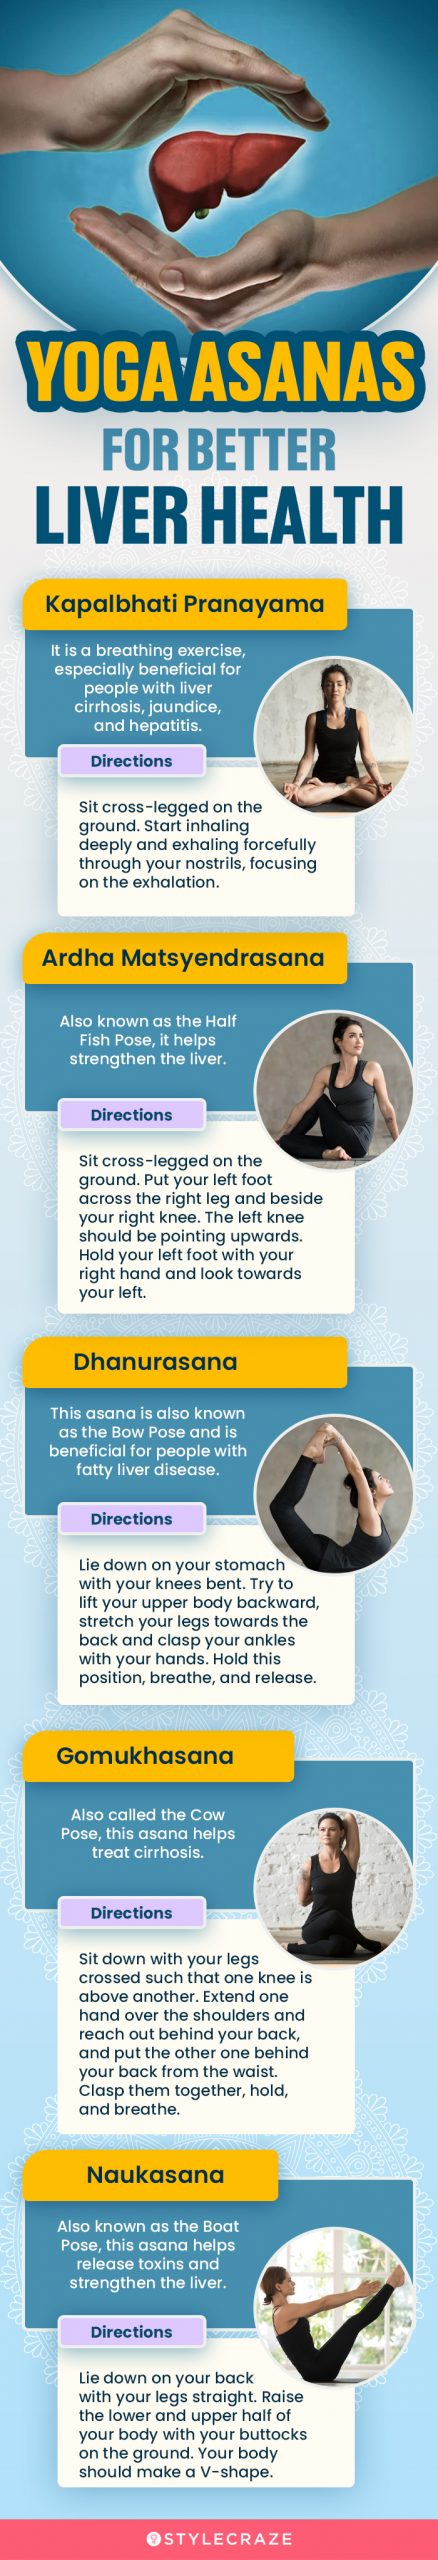 yoga asanas for better liver health (infographic)